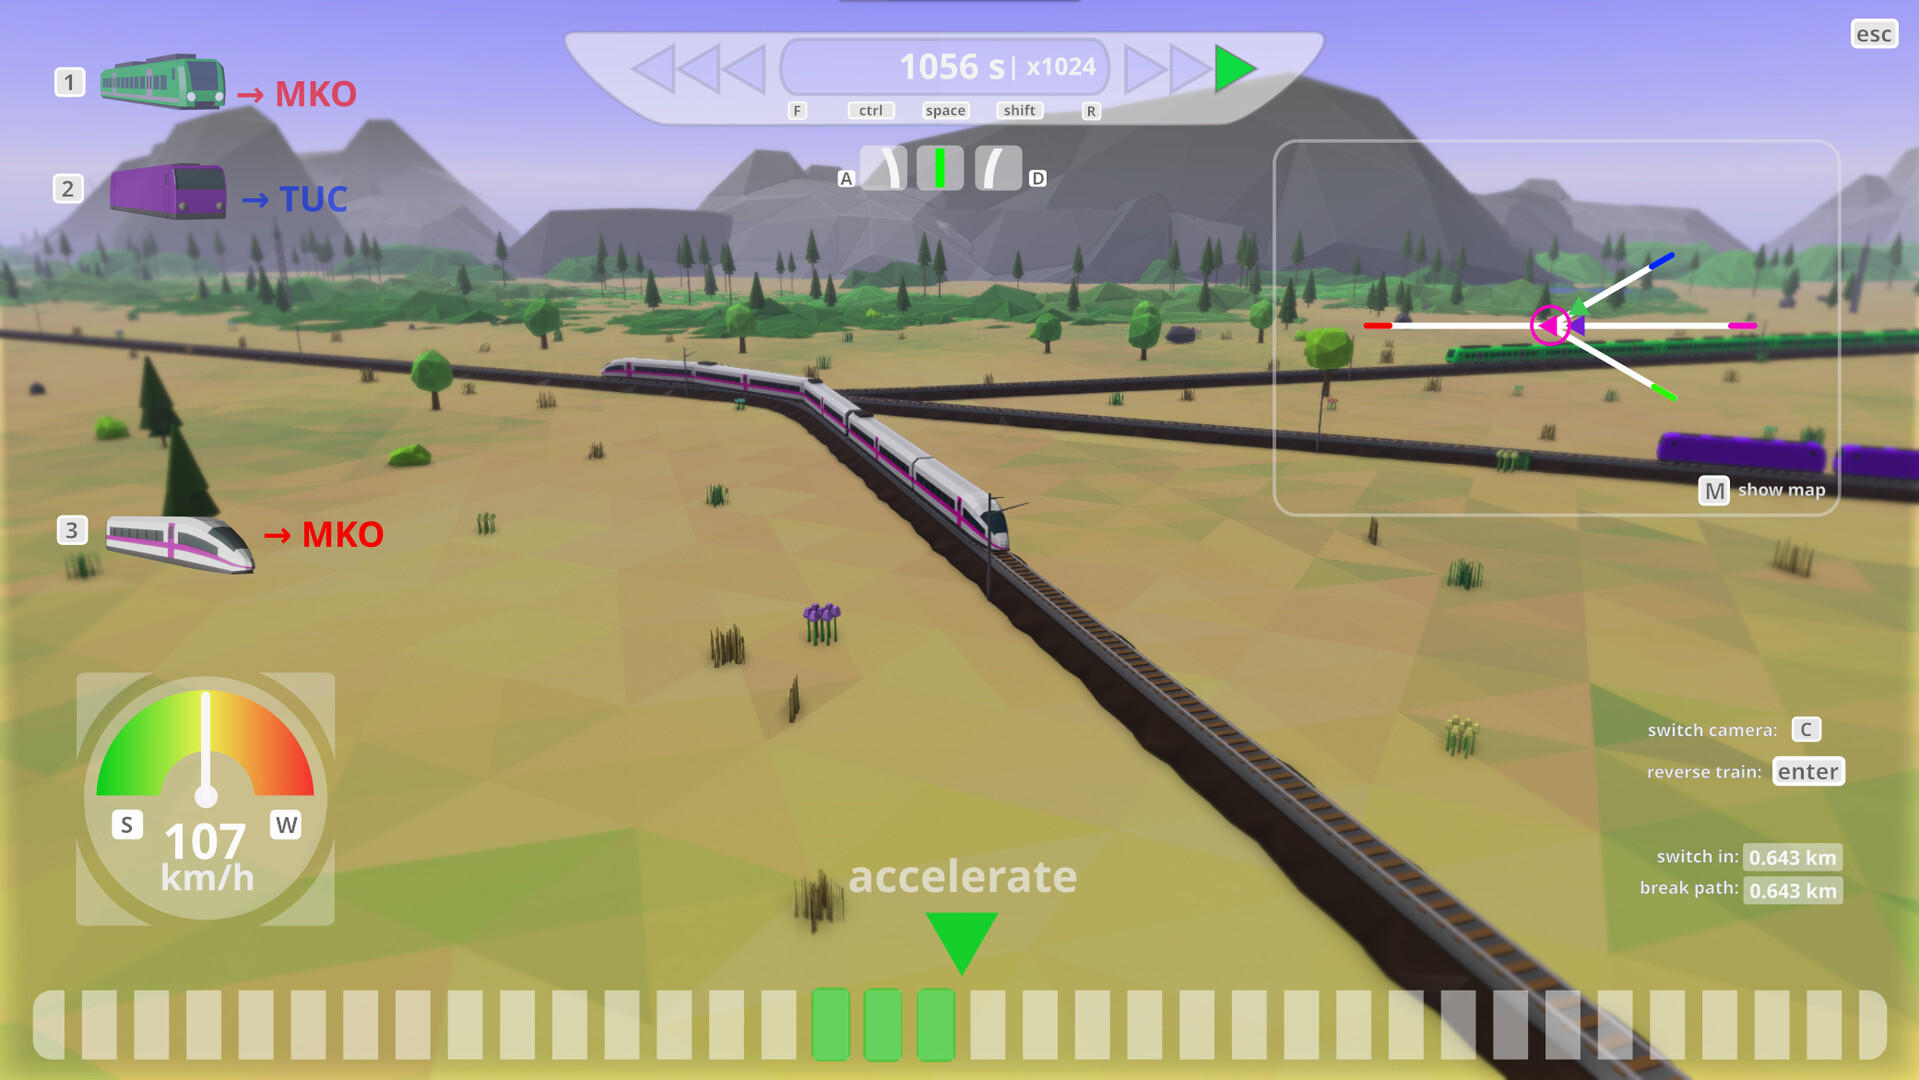 Screenshot 1 of กำหนดการรถไฟ 